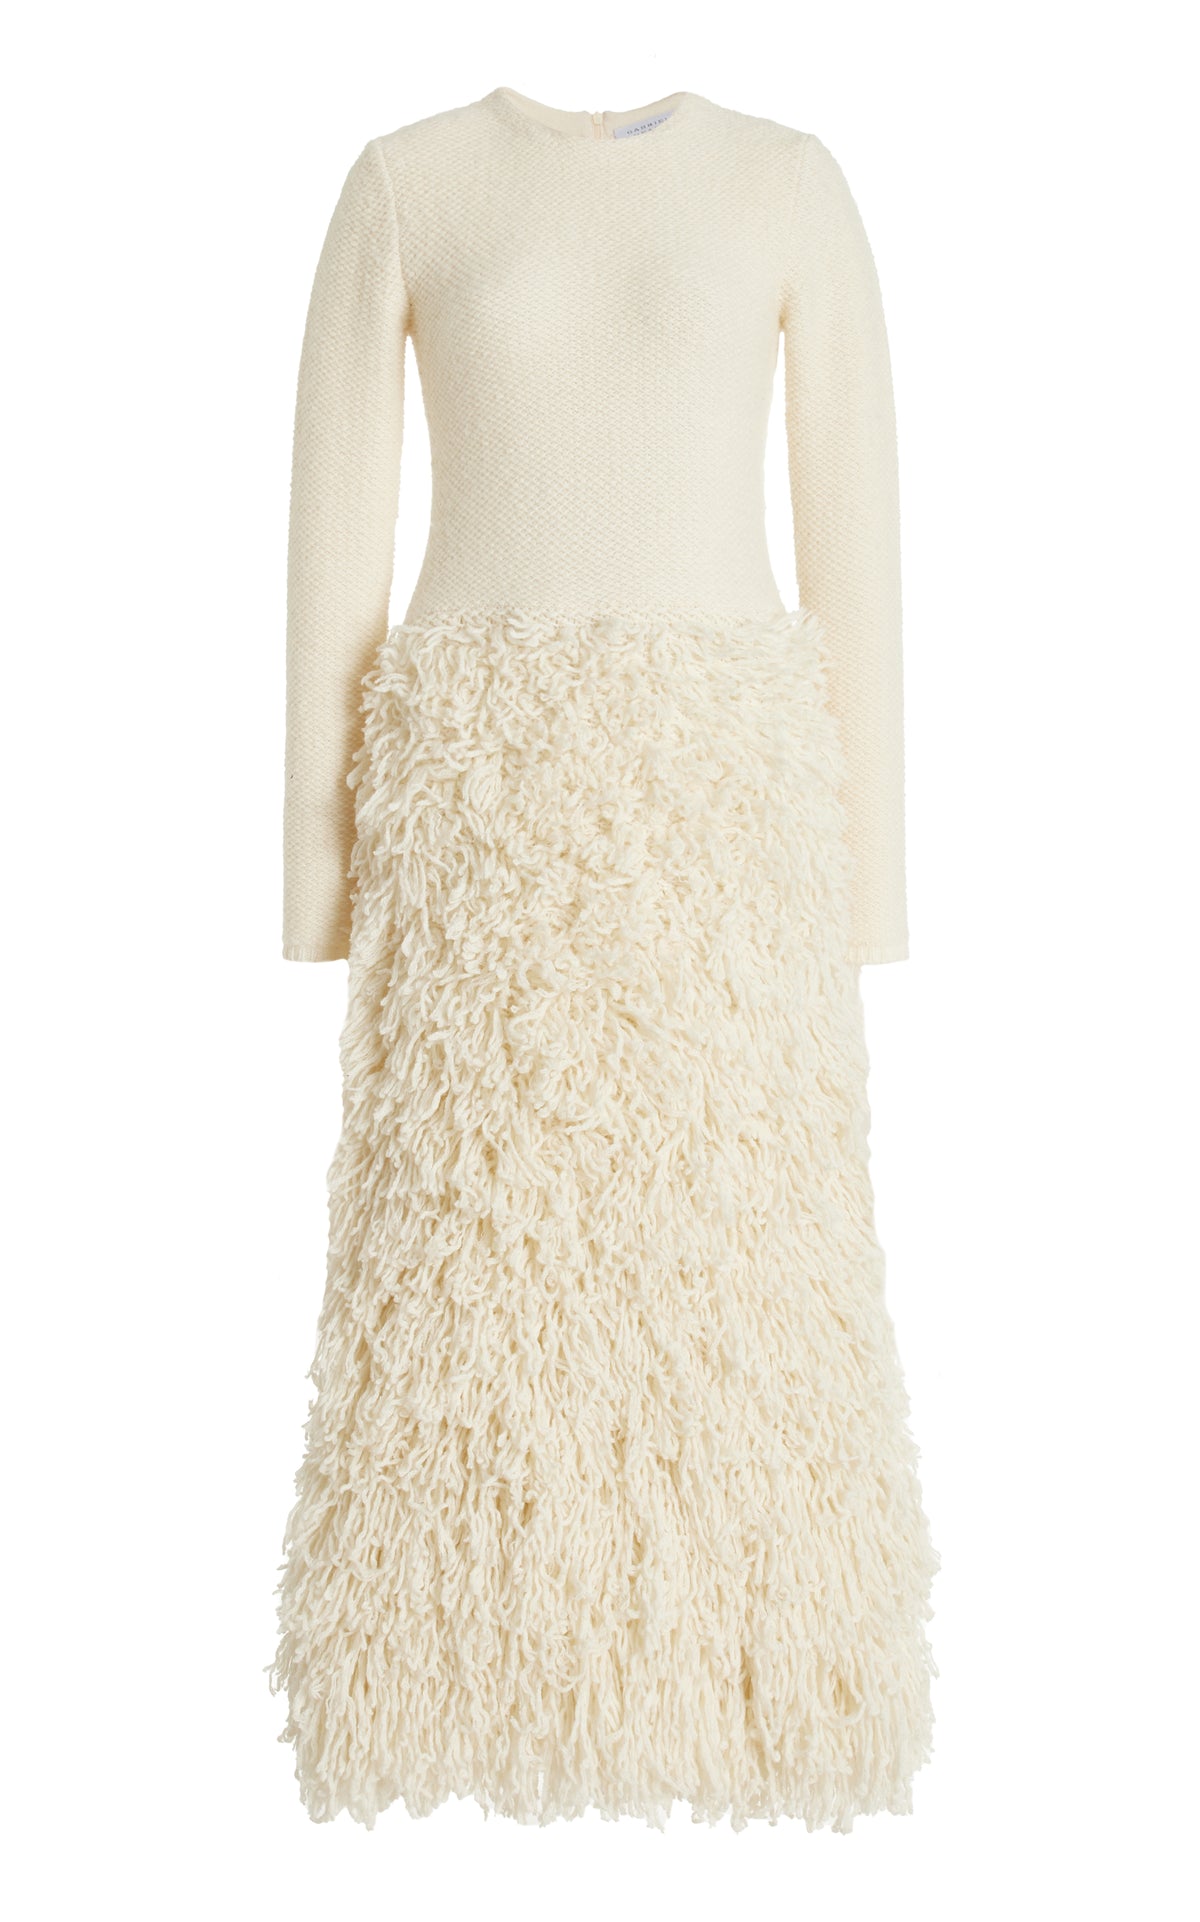 Turner Knit Dress in Ivory Virgin Wool Cashmere Silk